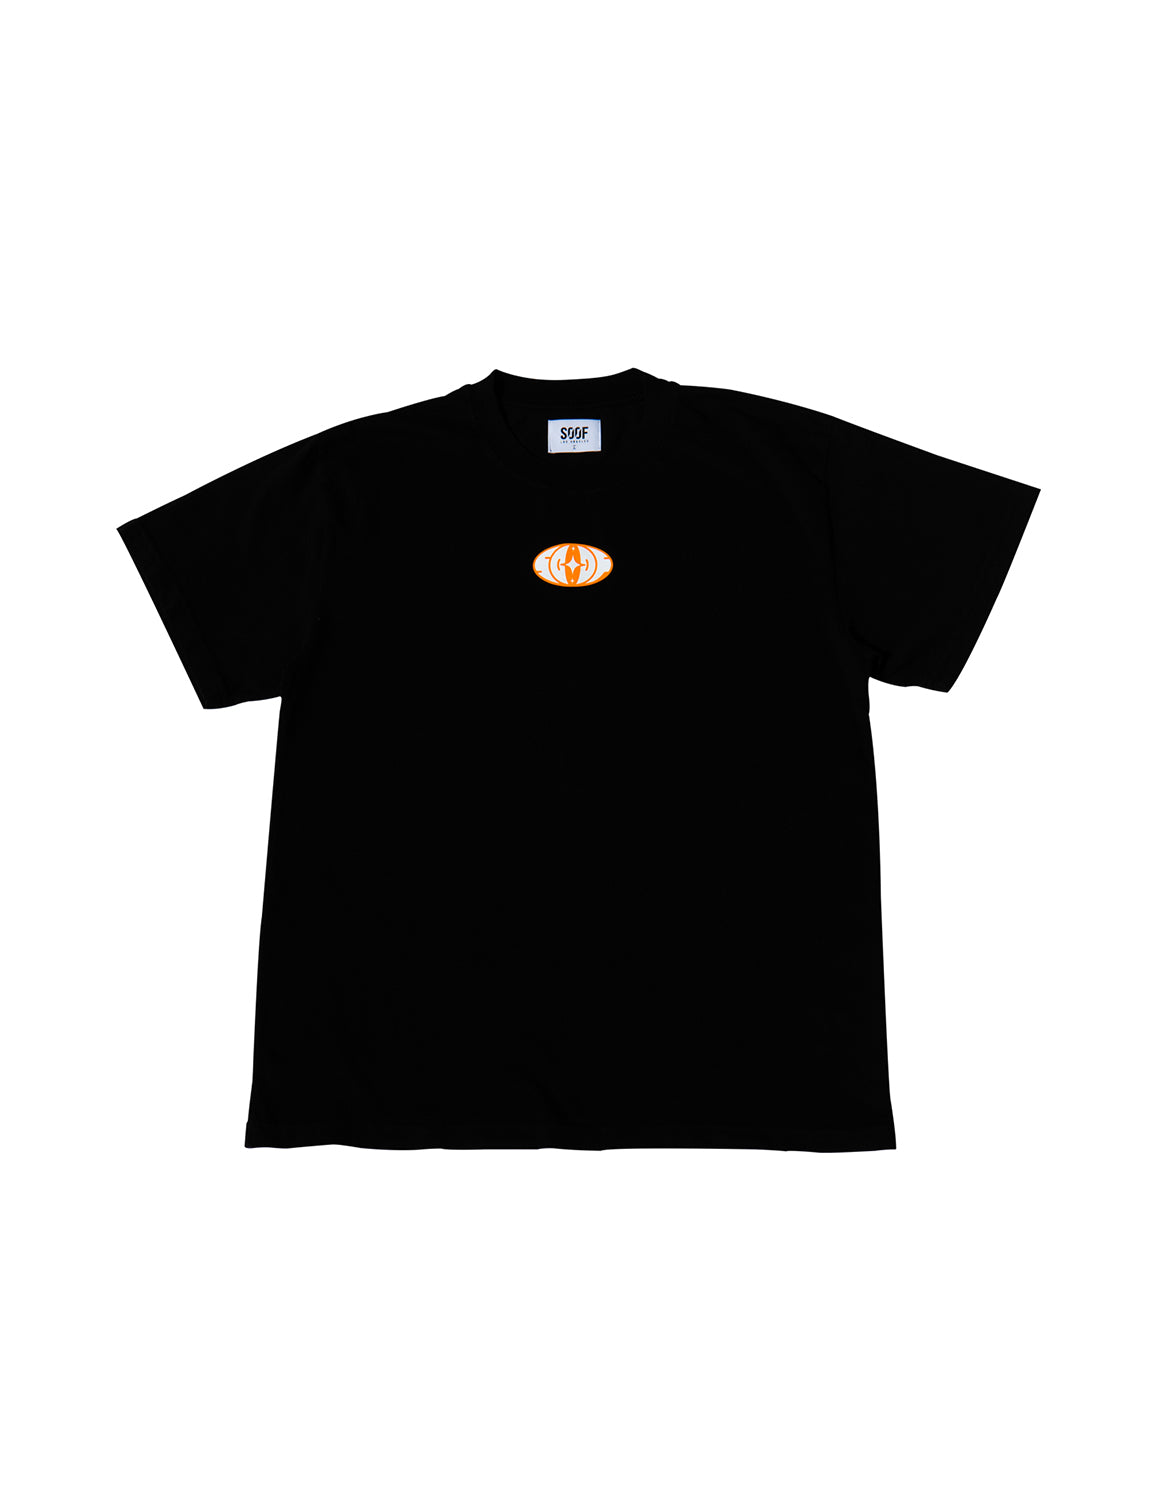 SOOF Oval Logo Short Sleeve Top